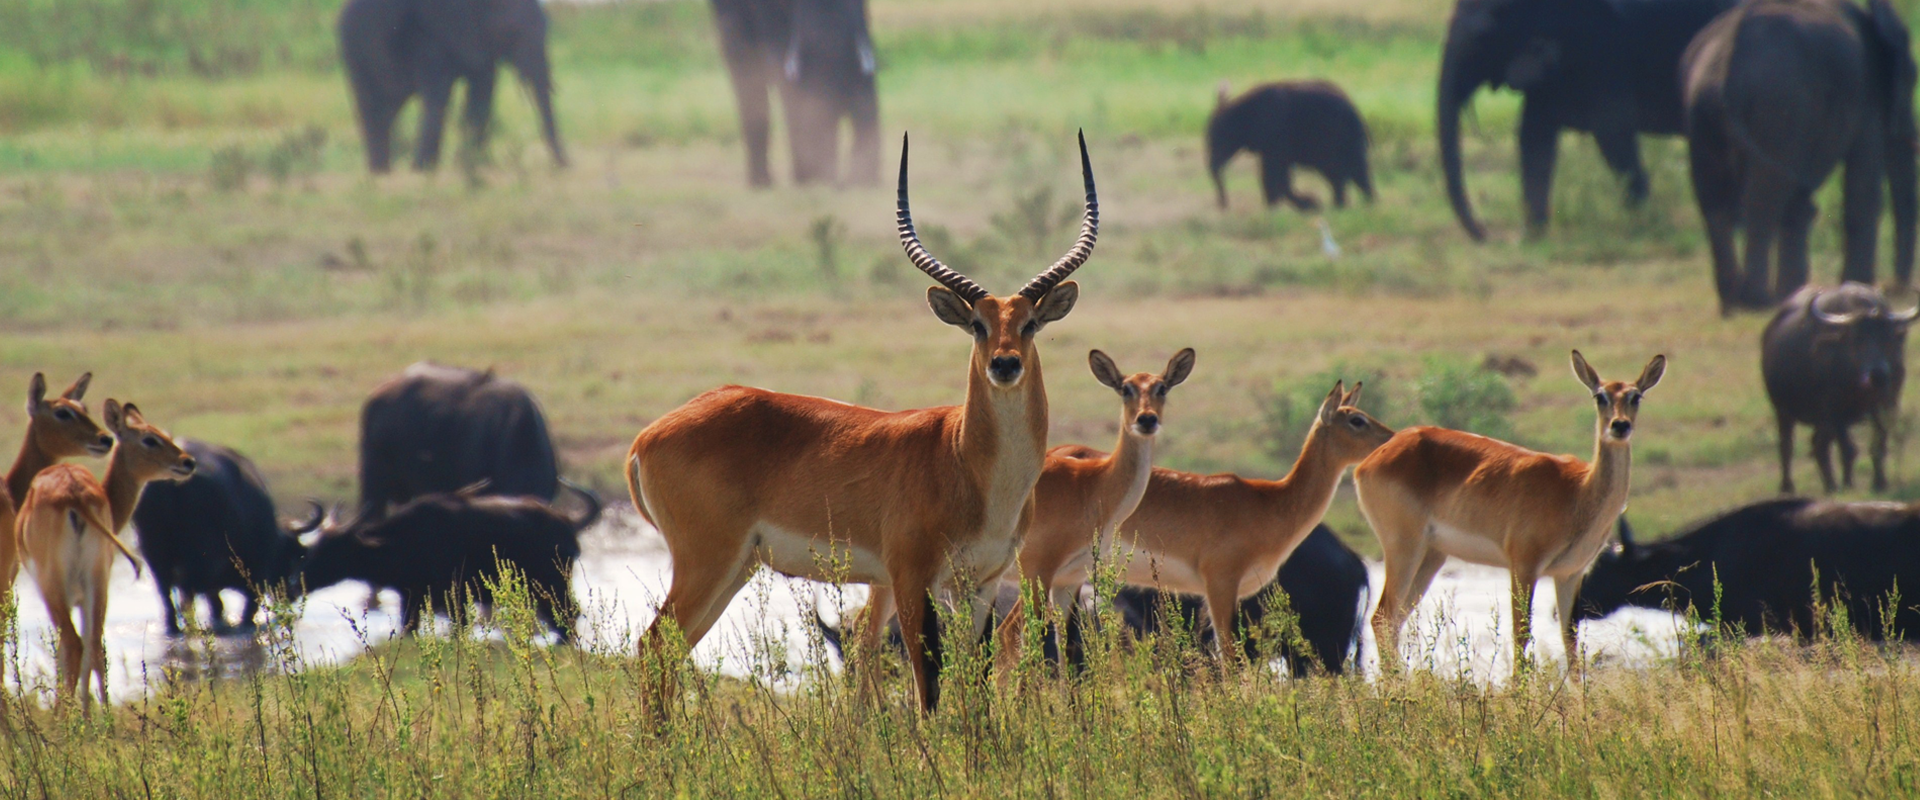 safari okavango